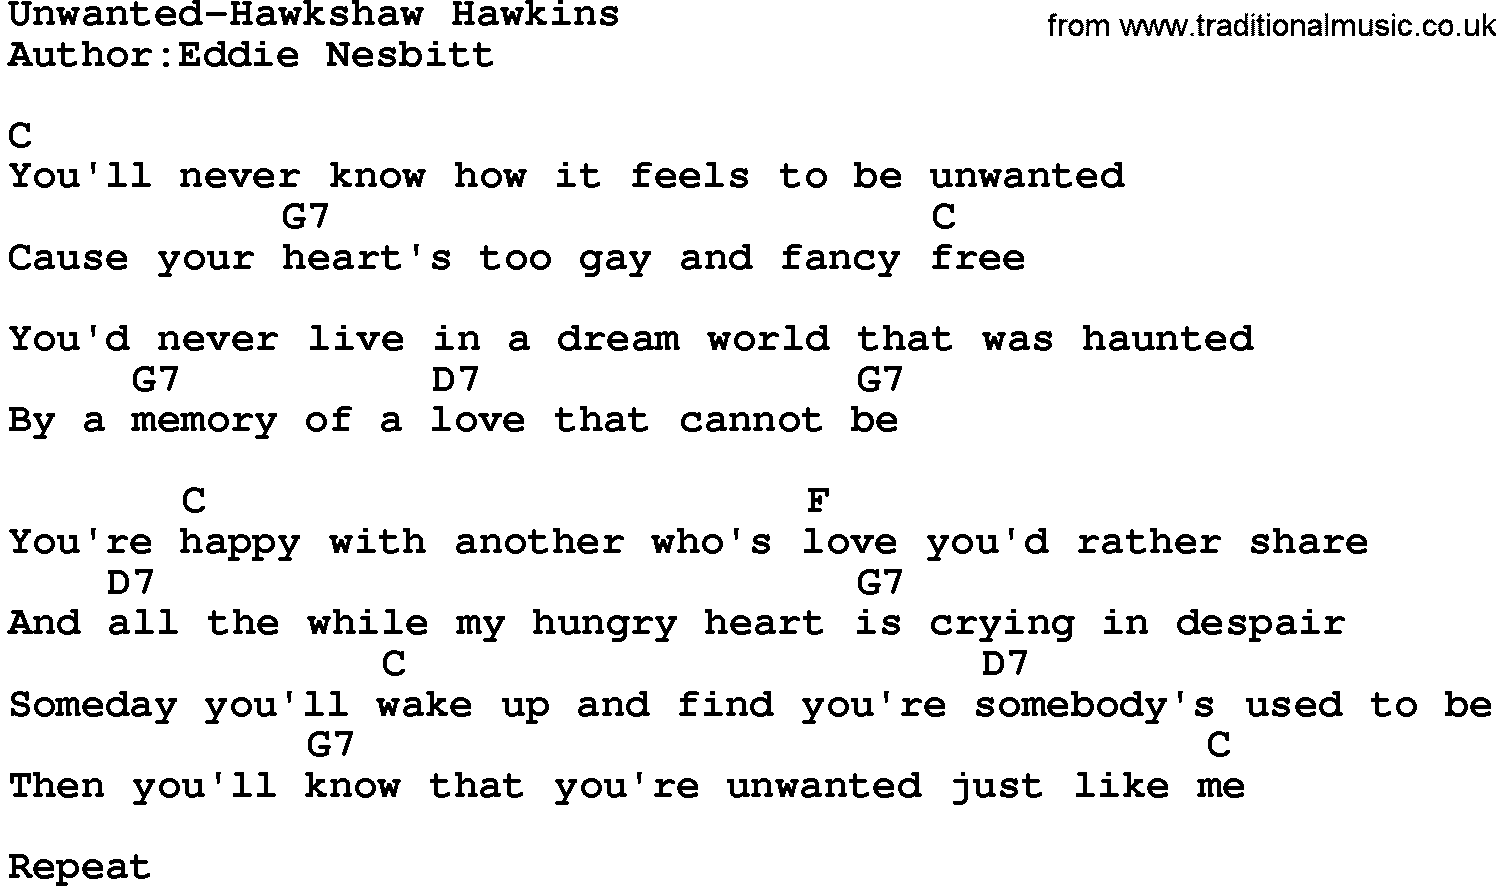 Country music song: Unwanted-Hawkshaw Hawkins lyrics and chords